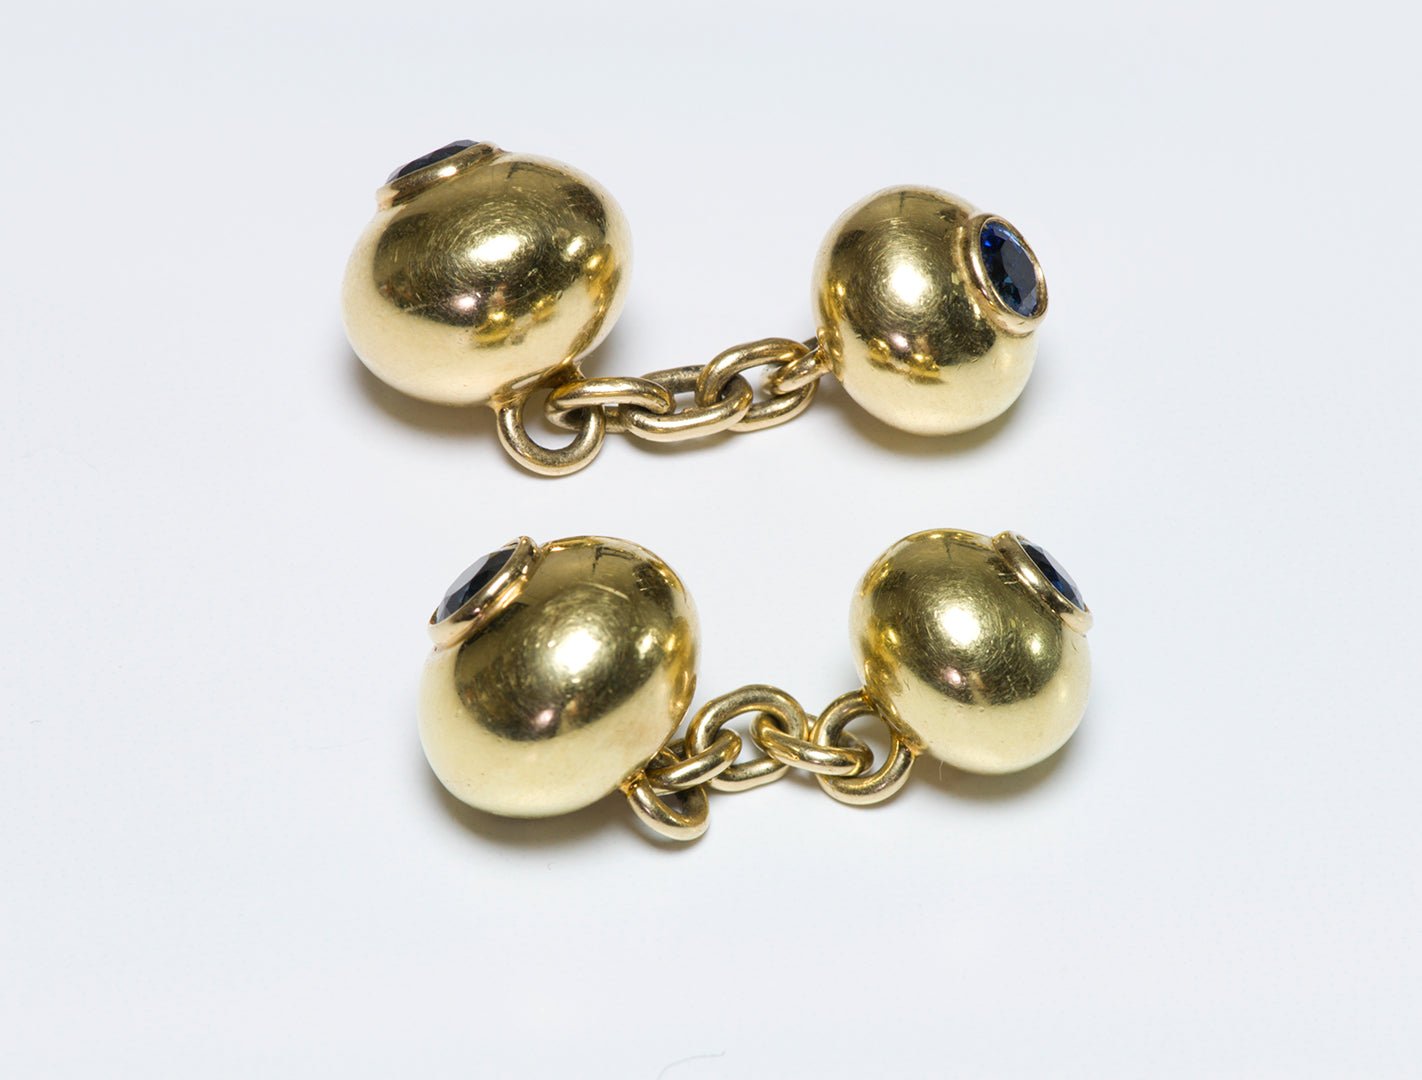 Vintage Sapphire Gold Bead Chain Cufflinks